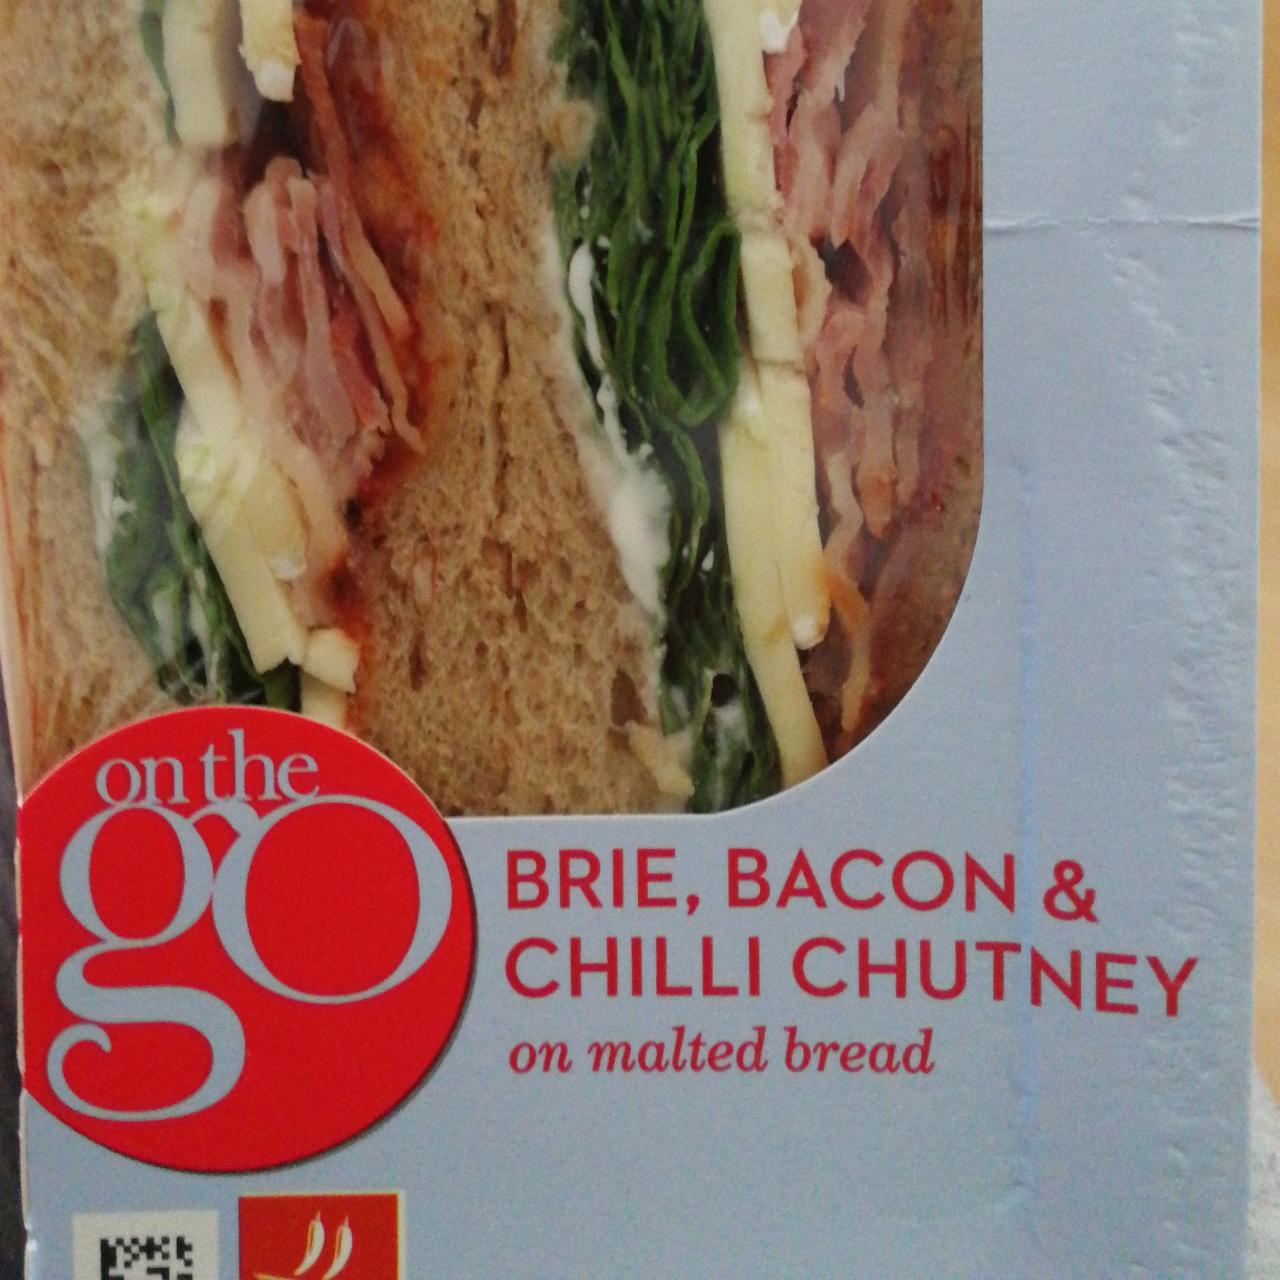 Fotografie - Brie, bacon & chilli chutney sandwich Sainsbury's